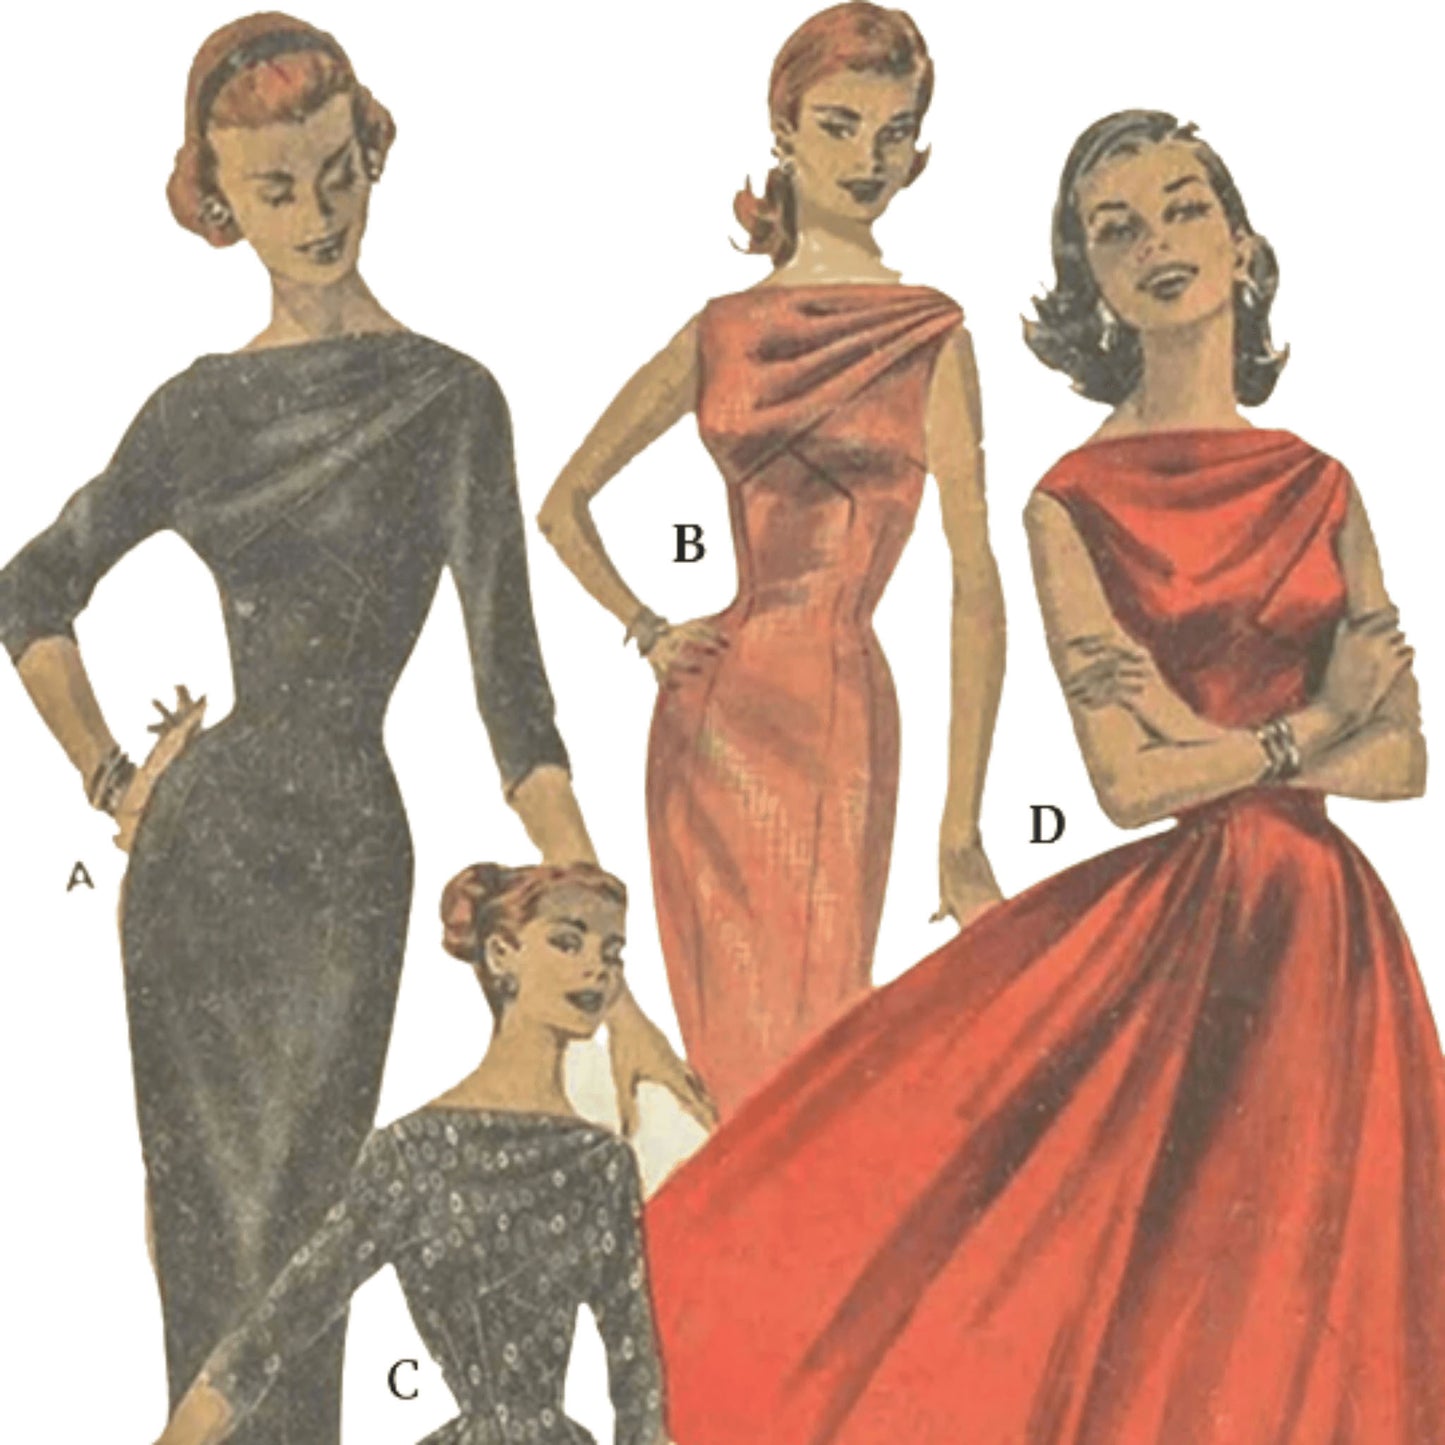  1950s Women's Long Sleeve Evening Dress Plaid Elegant